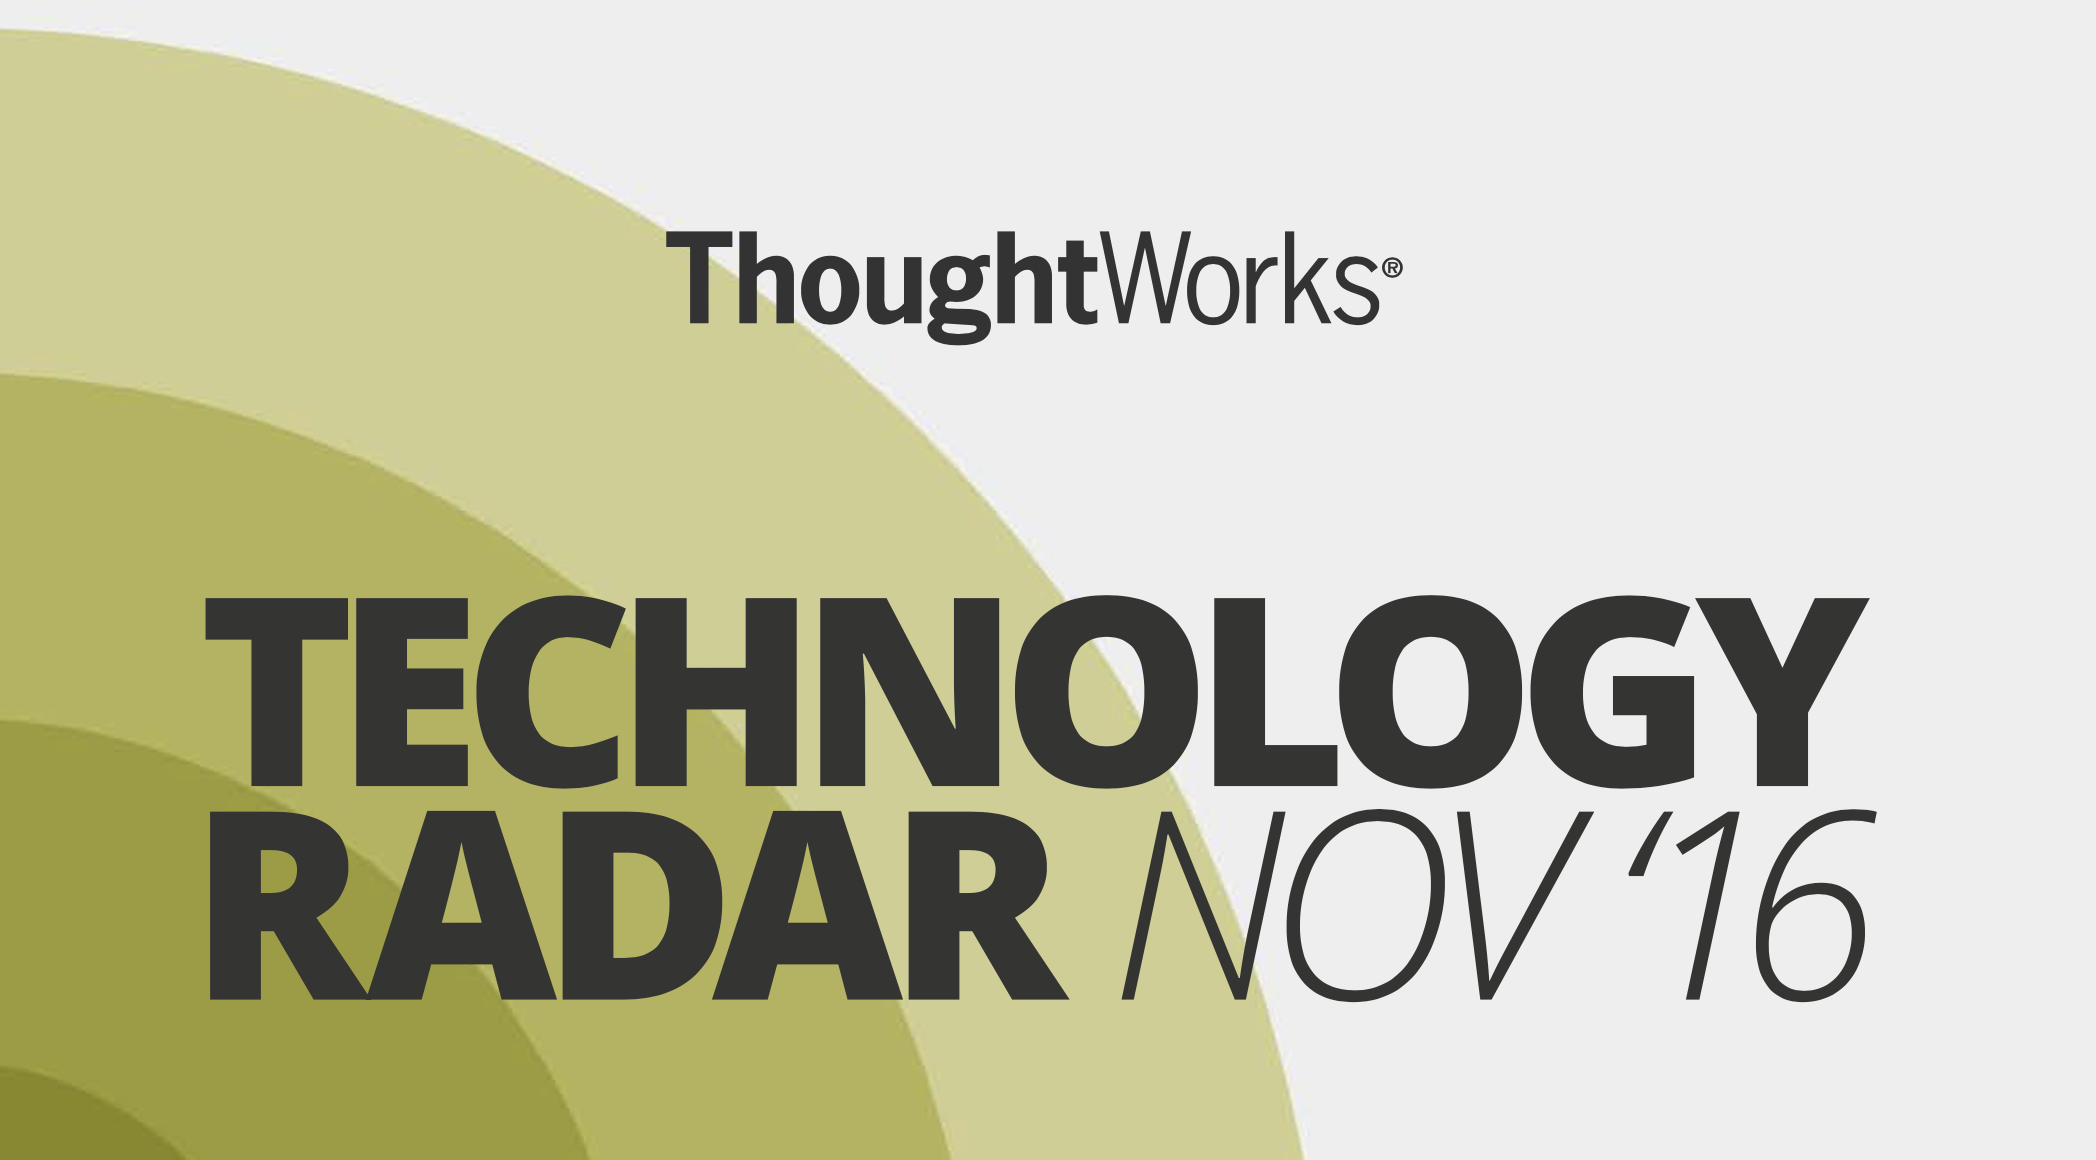 thoughtworks 发布新一期技术雷达,强调增强现实(ar)